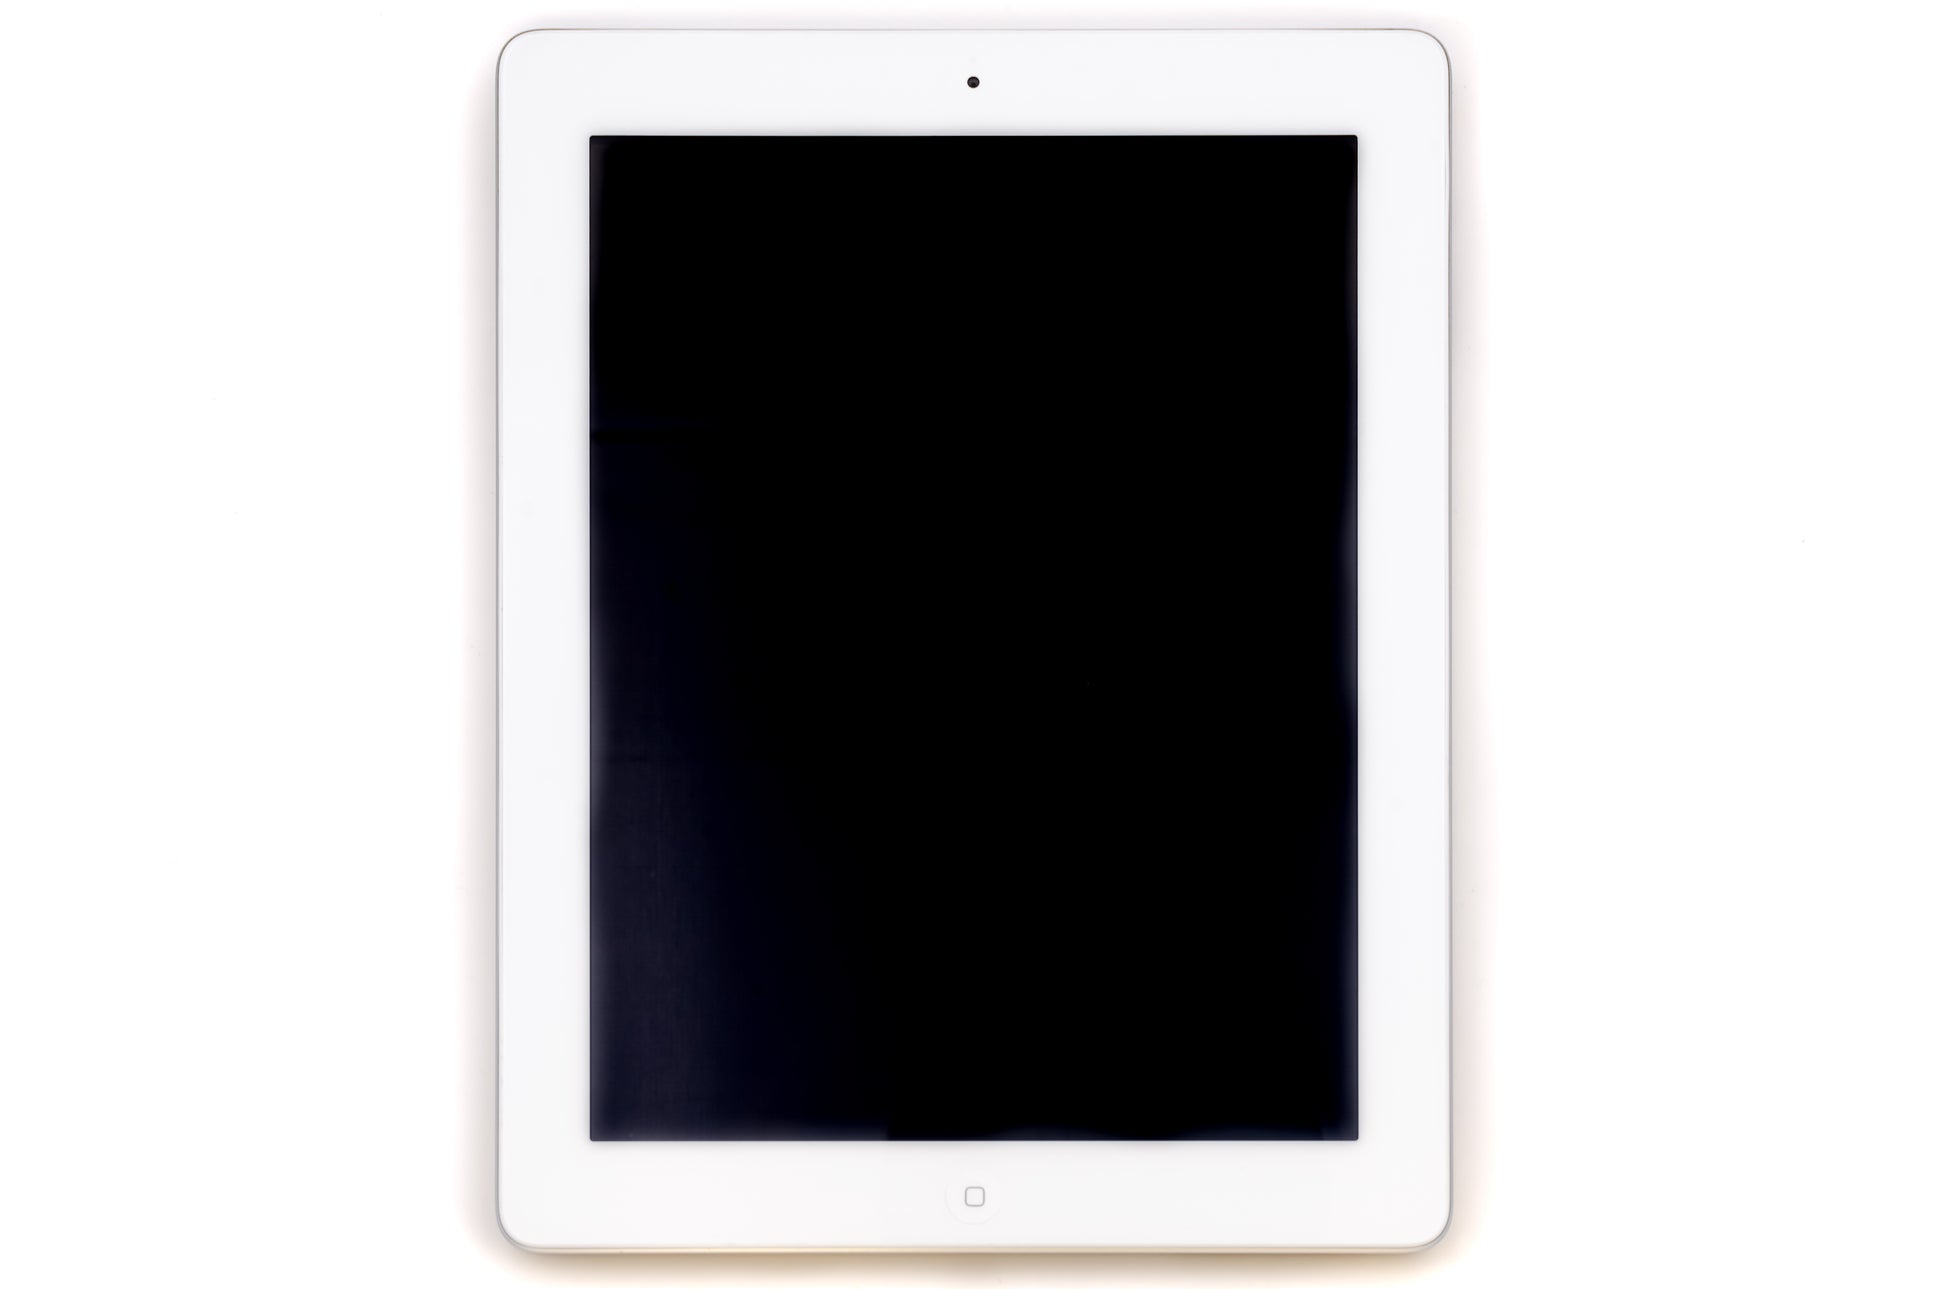 apple-2012-9.7-inch-ipad-4-a1458-silver/white-2